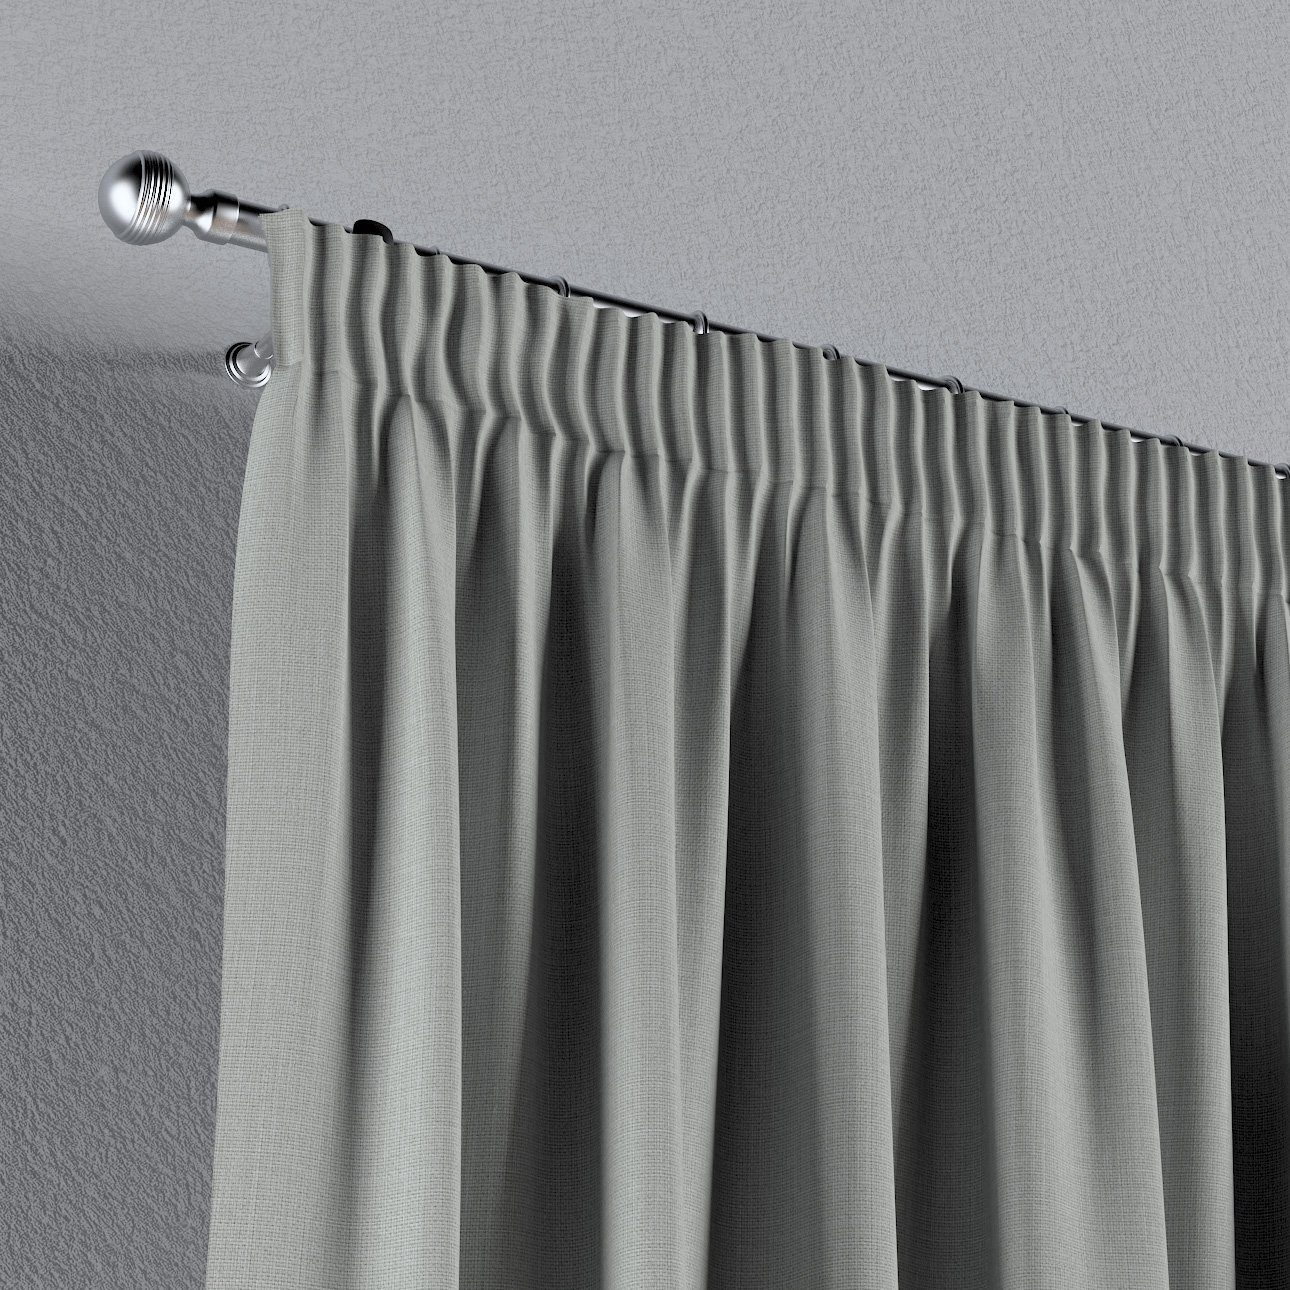 grau mit Kräuselband Vorhang cm, 60x100 300 cm, Blackout Dekoria Vorhang